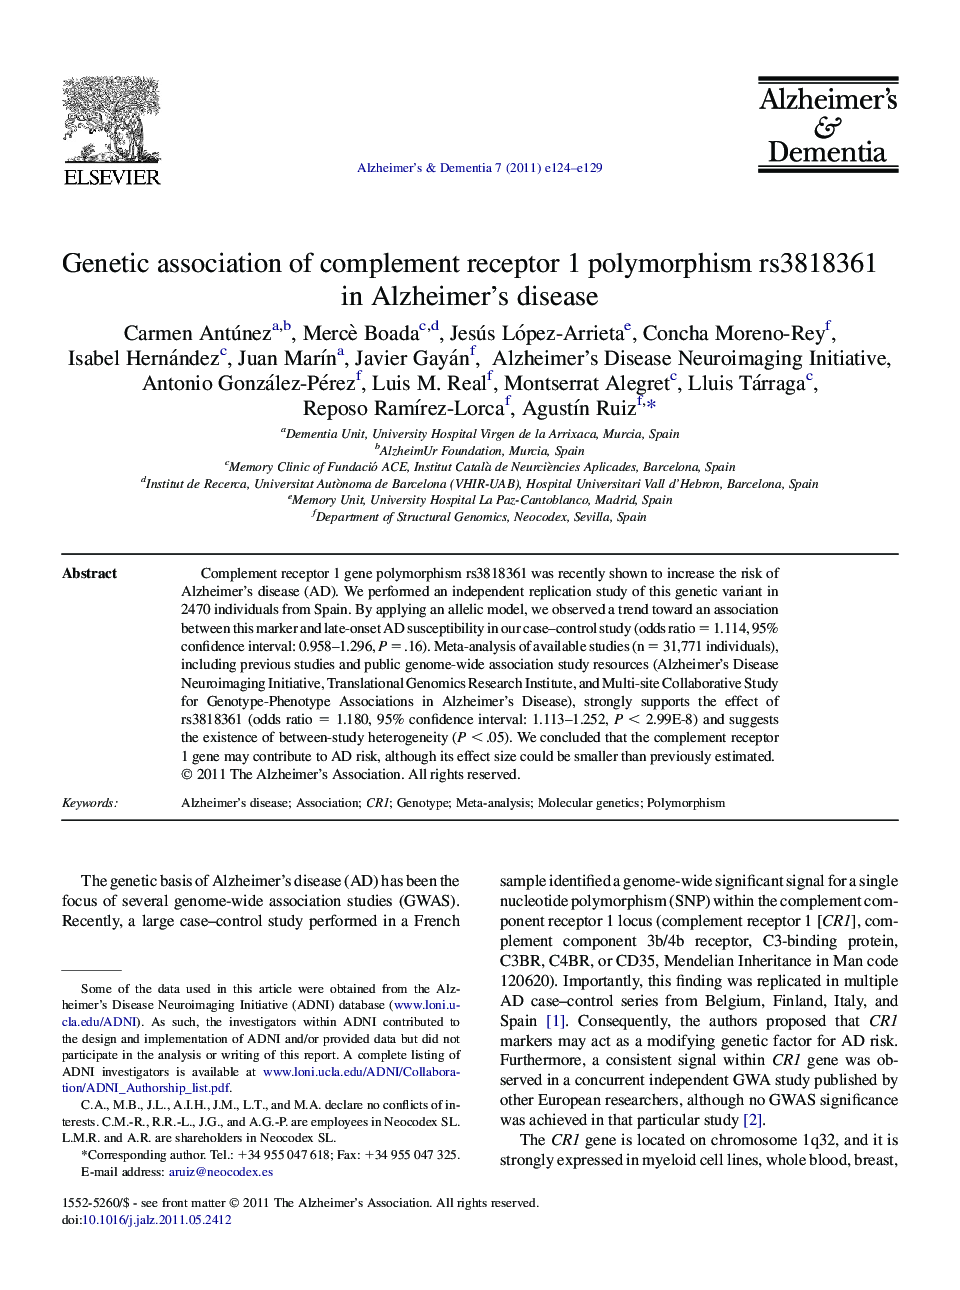 Genetic association of complement receptor 1 polymorphism rs3818361 in Alzheimer's disease